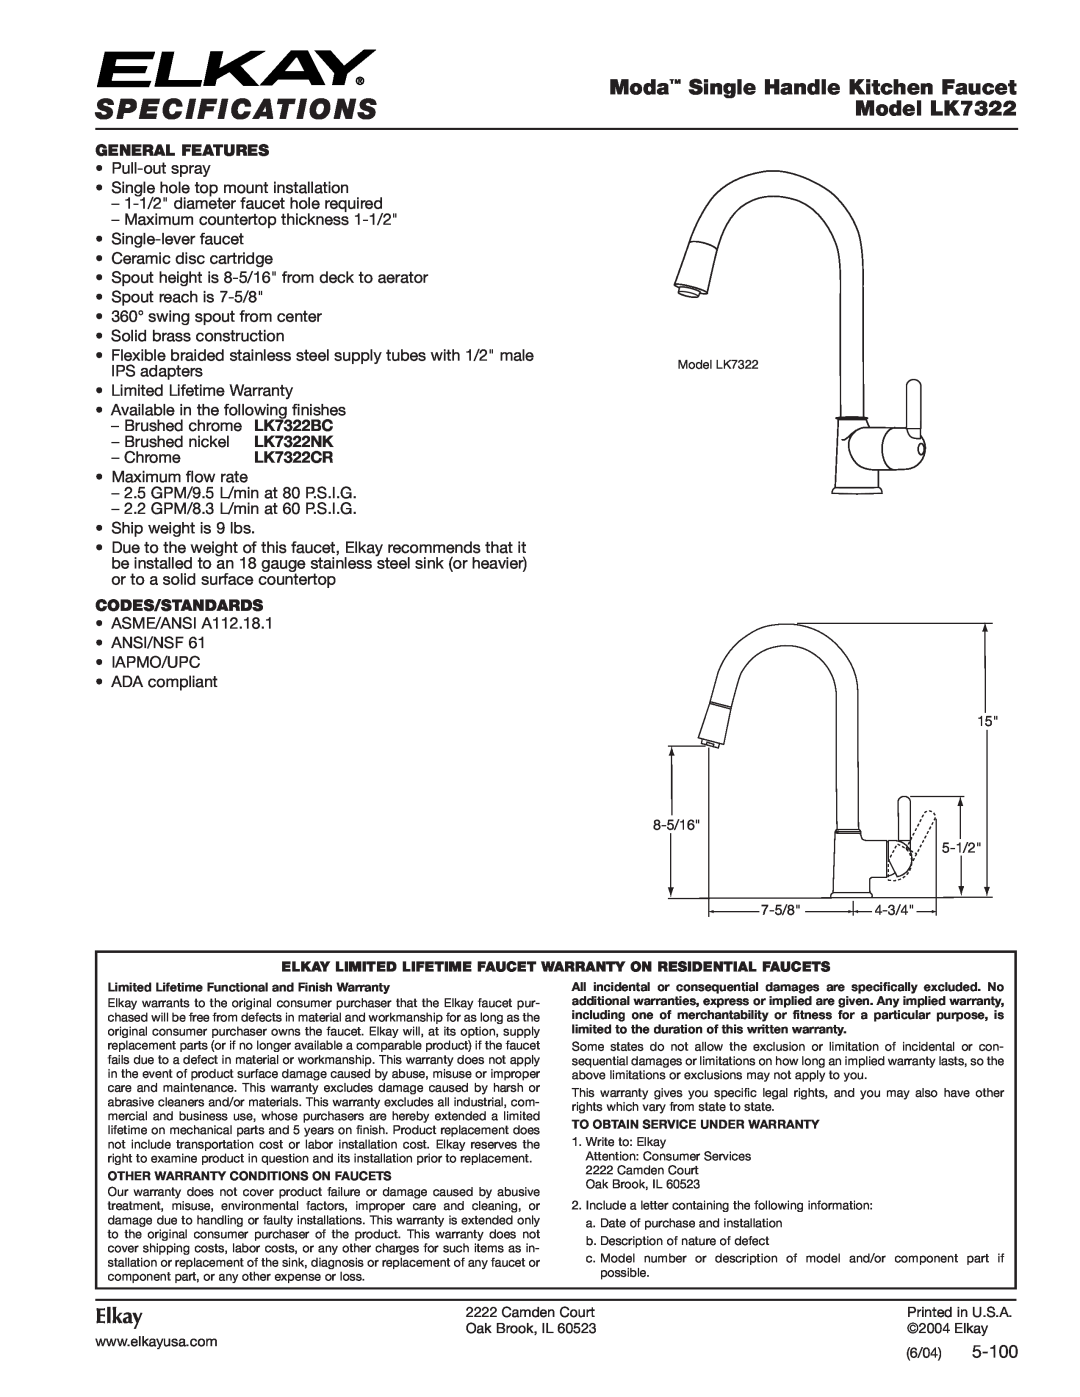 Elkay specifications Specifications, Moda Single Handle Kitchen Faucet, Model LK7322, Elkay, 5-100, General Features 